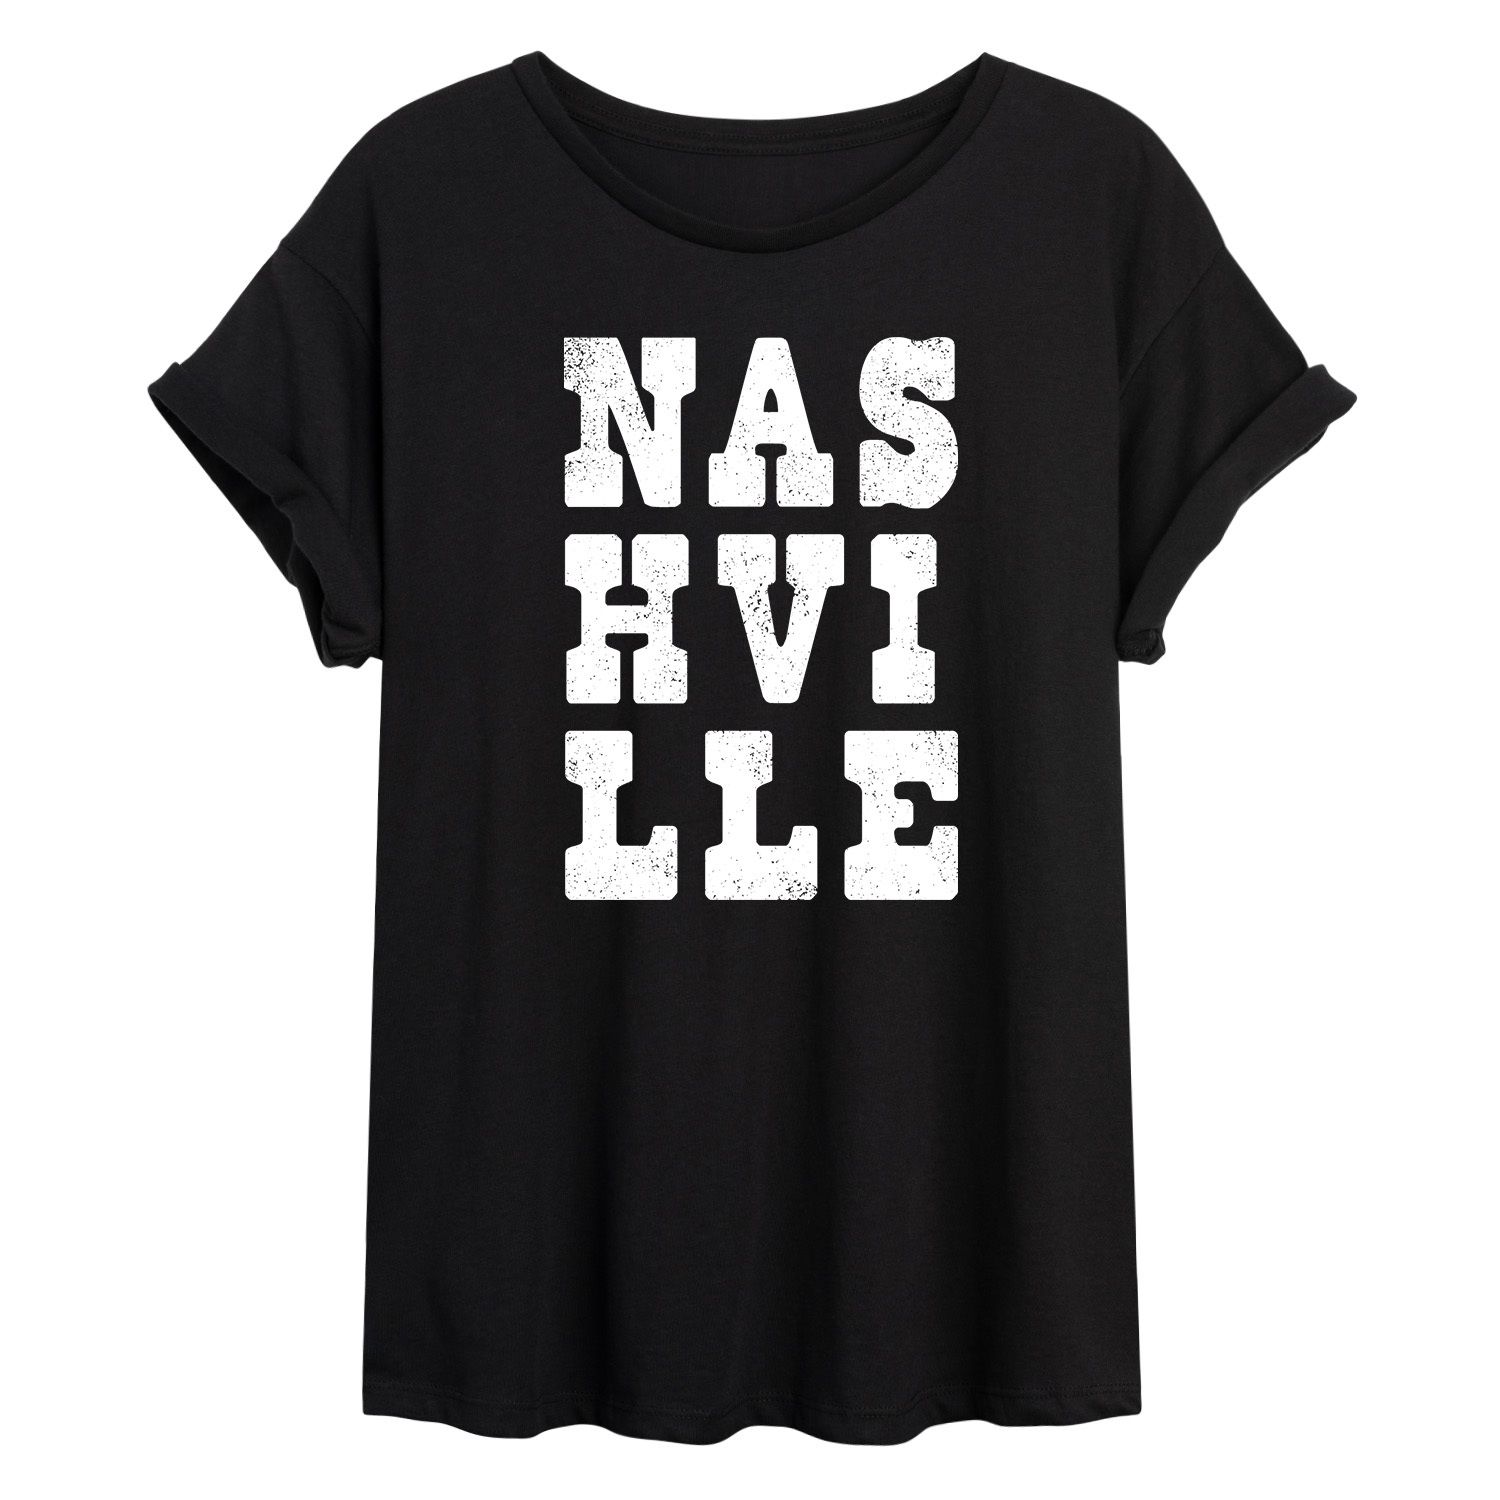 Размерная футболка с рисунком Nashville Tennessee для юниоров Licensed Character